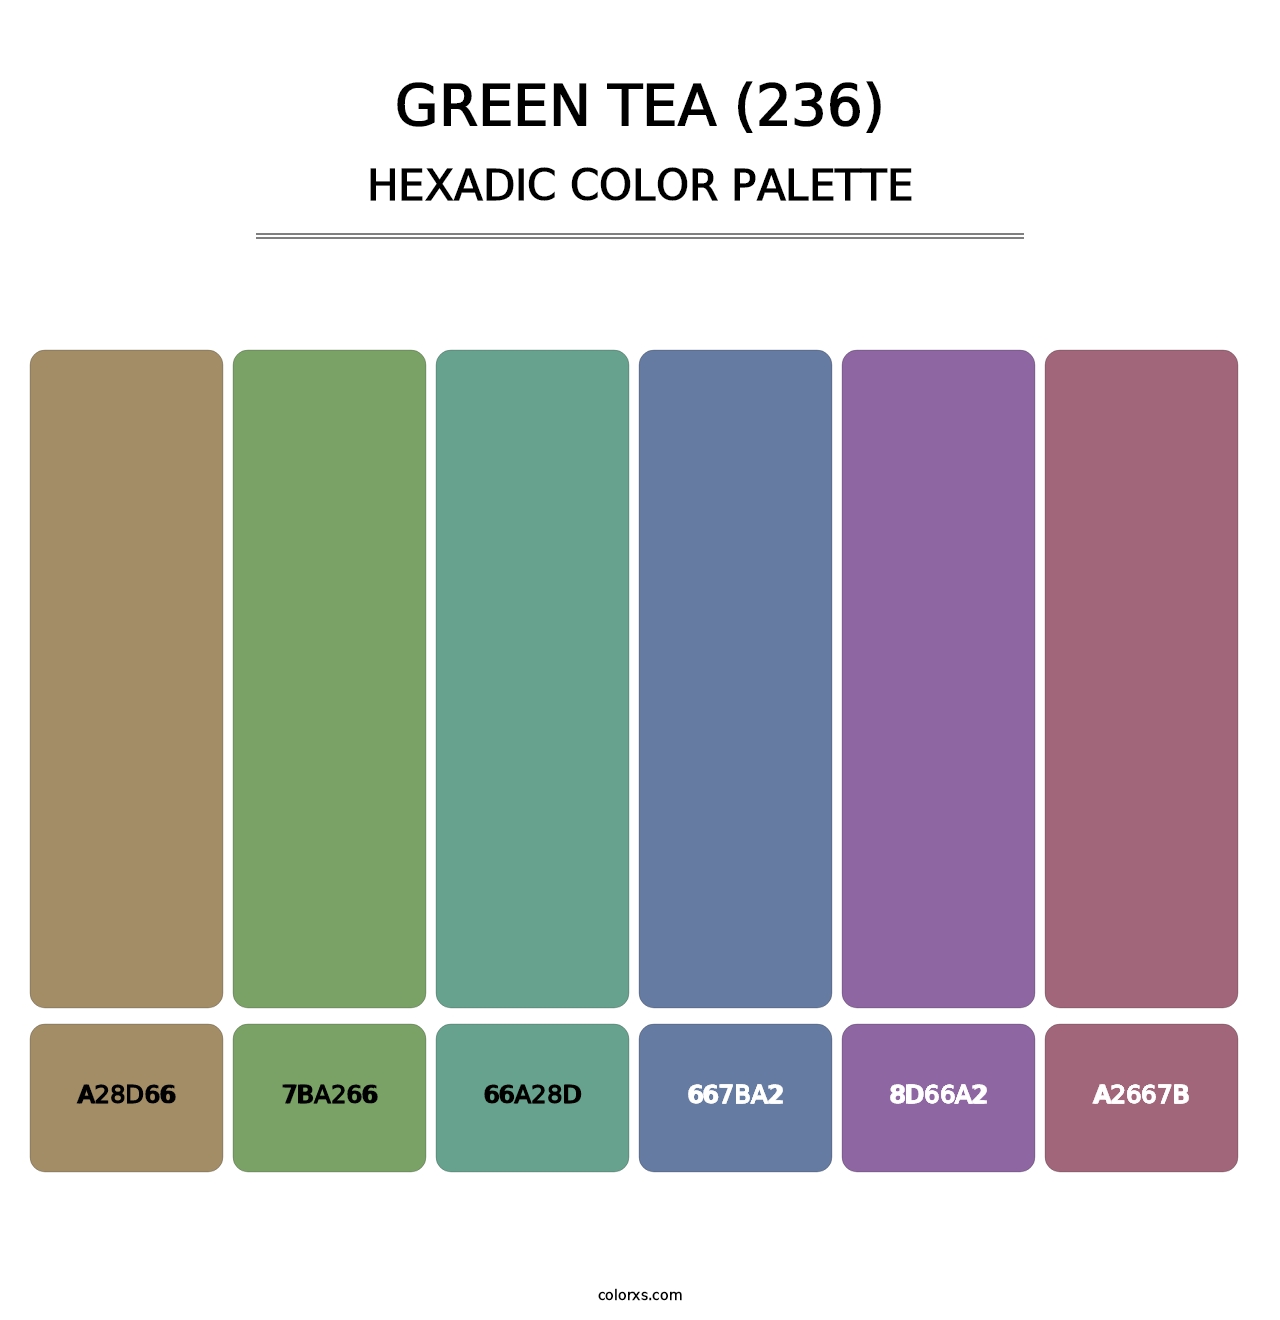 Green Tea (236) - Hexadic Color Palette